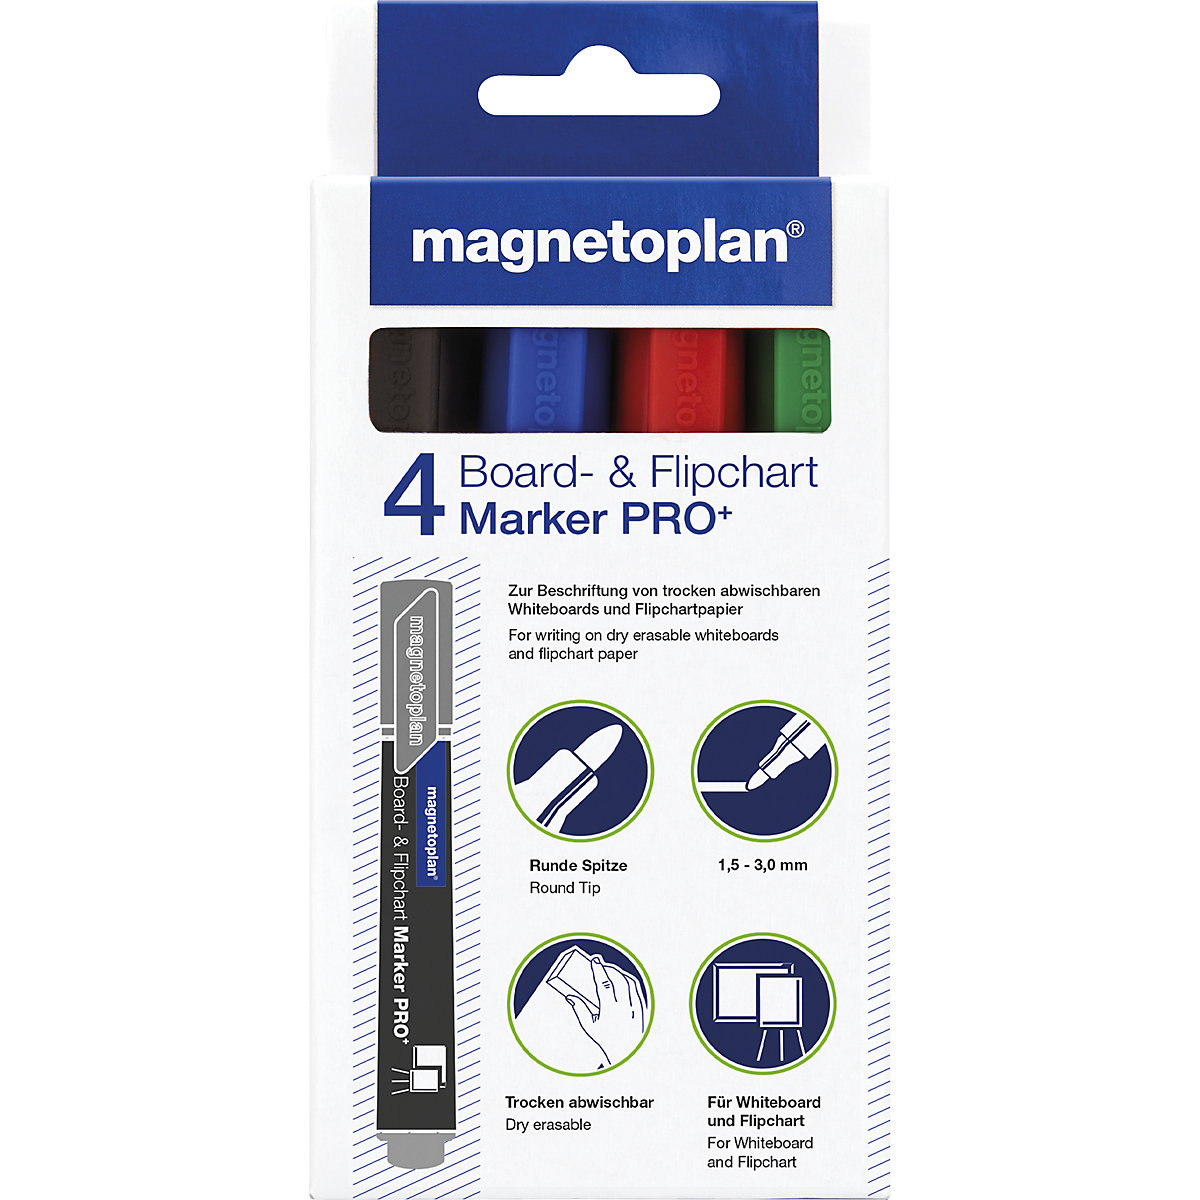 Board markere și markere pentru flipchart, sortate – magnetoplan (Imagine produs 2)-1